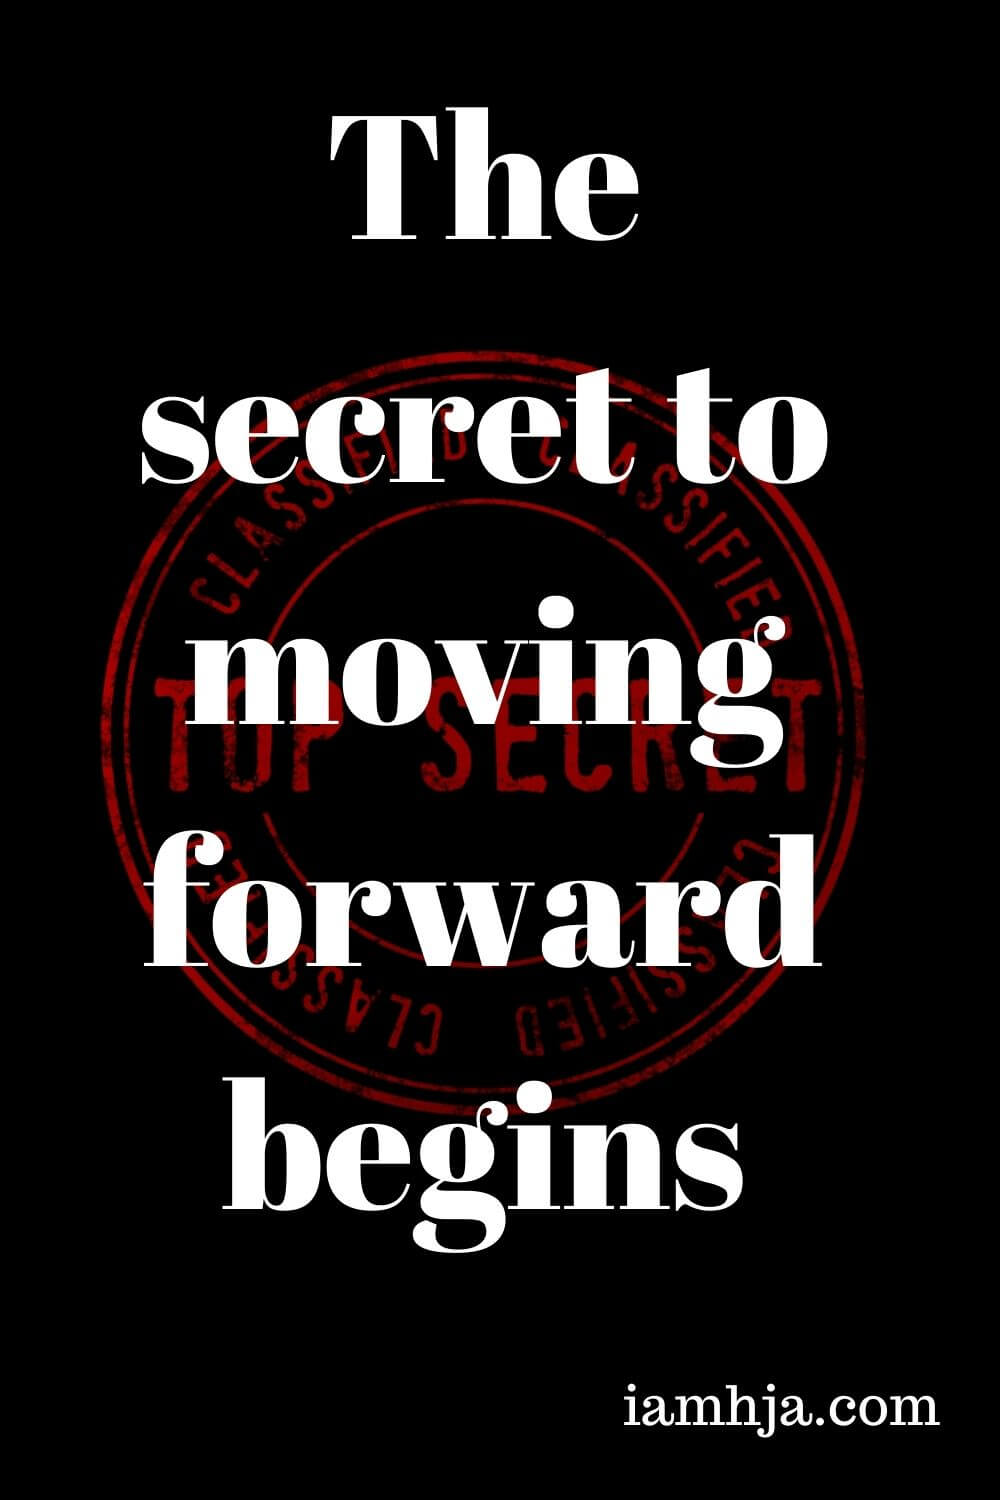 The secret to moving forward begins